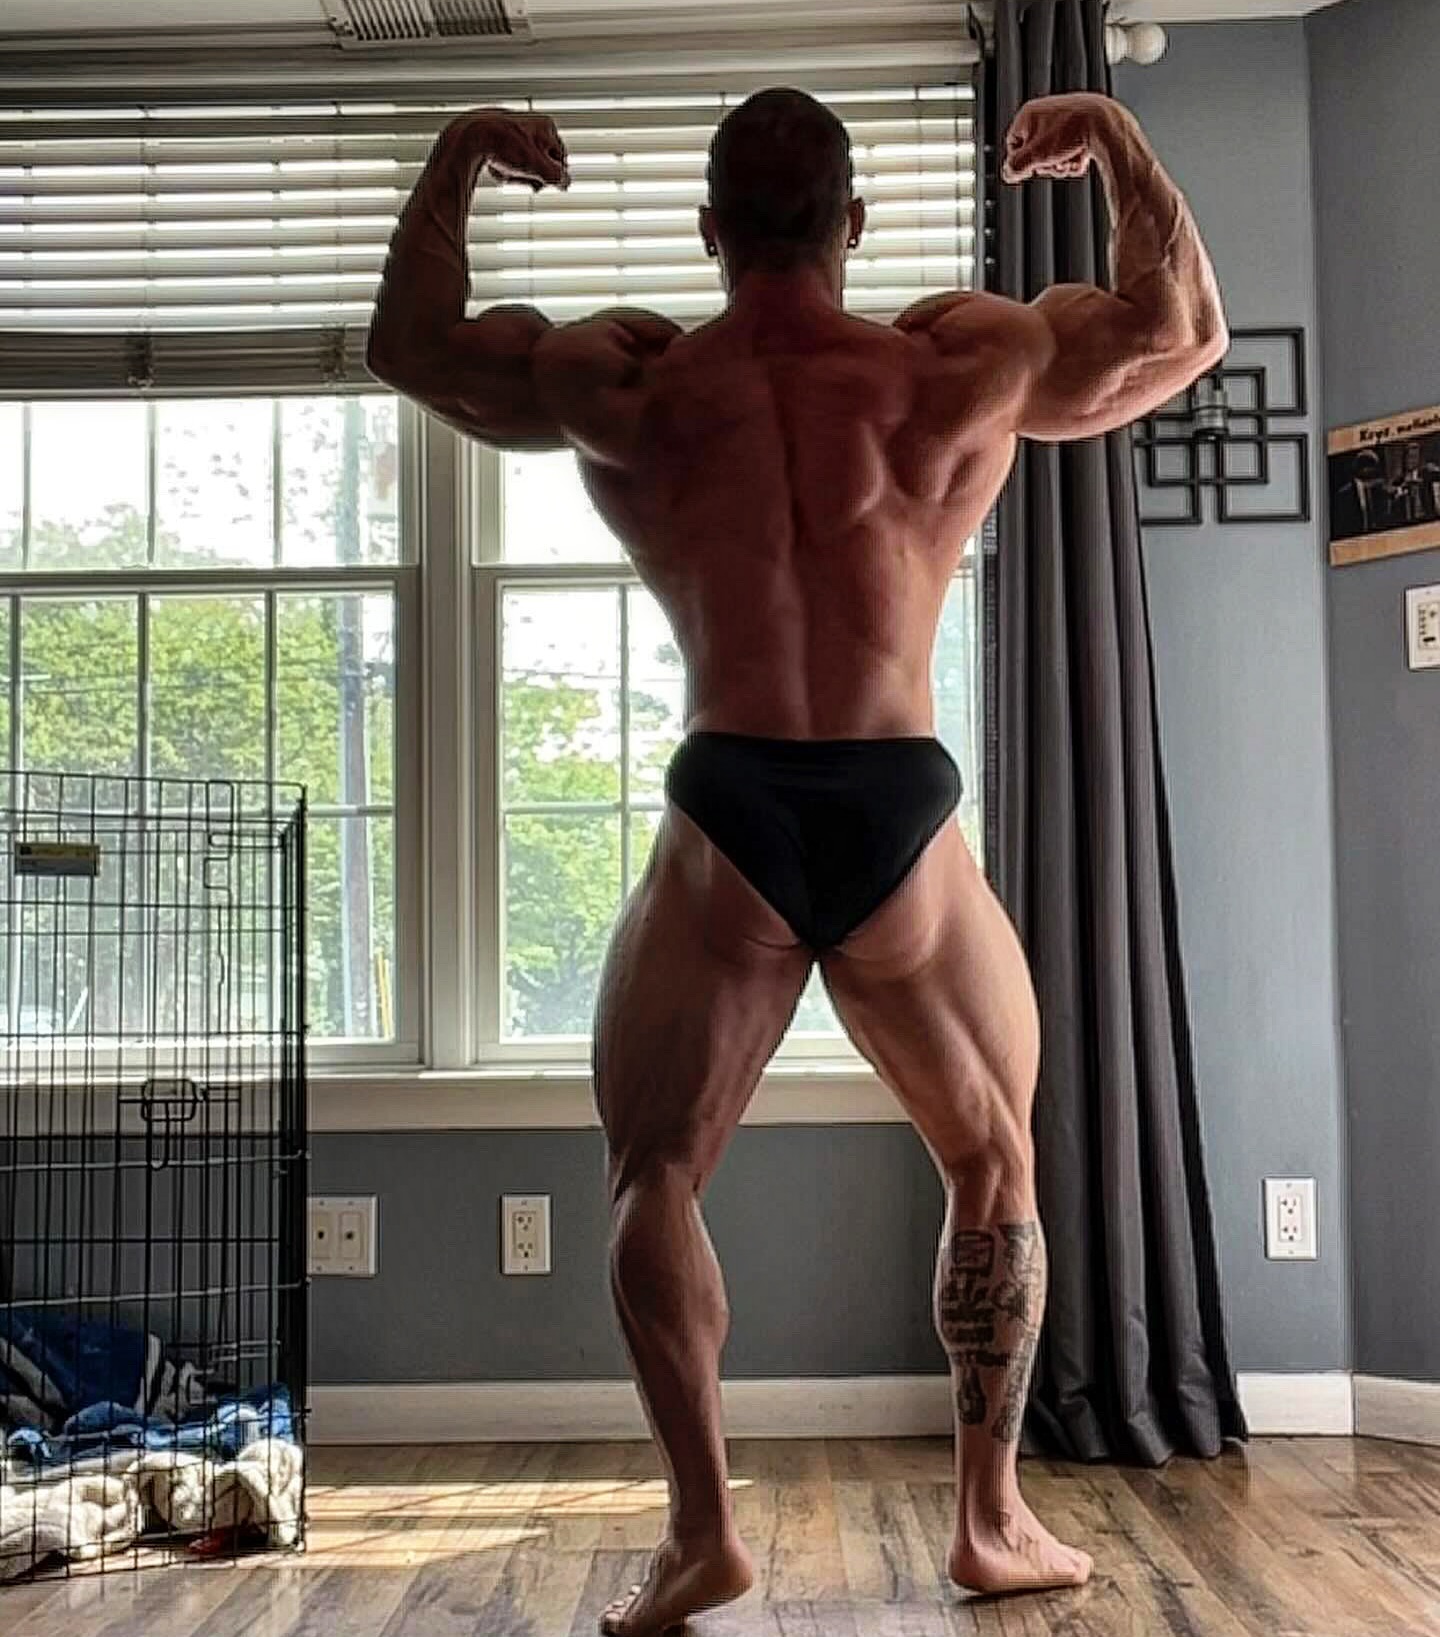 More posing with @brandenmray 💪🏼
.
.
Fine tuning
.
#posing #posingtips #classicphysique #bodybuilding #212 #procard #npc #jrusas #lean #10daysout #veins #lats #traps #hams #glutes #calves #back #biceps #triceps